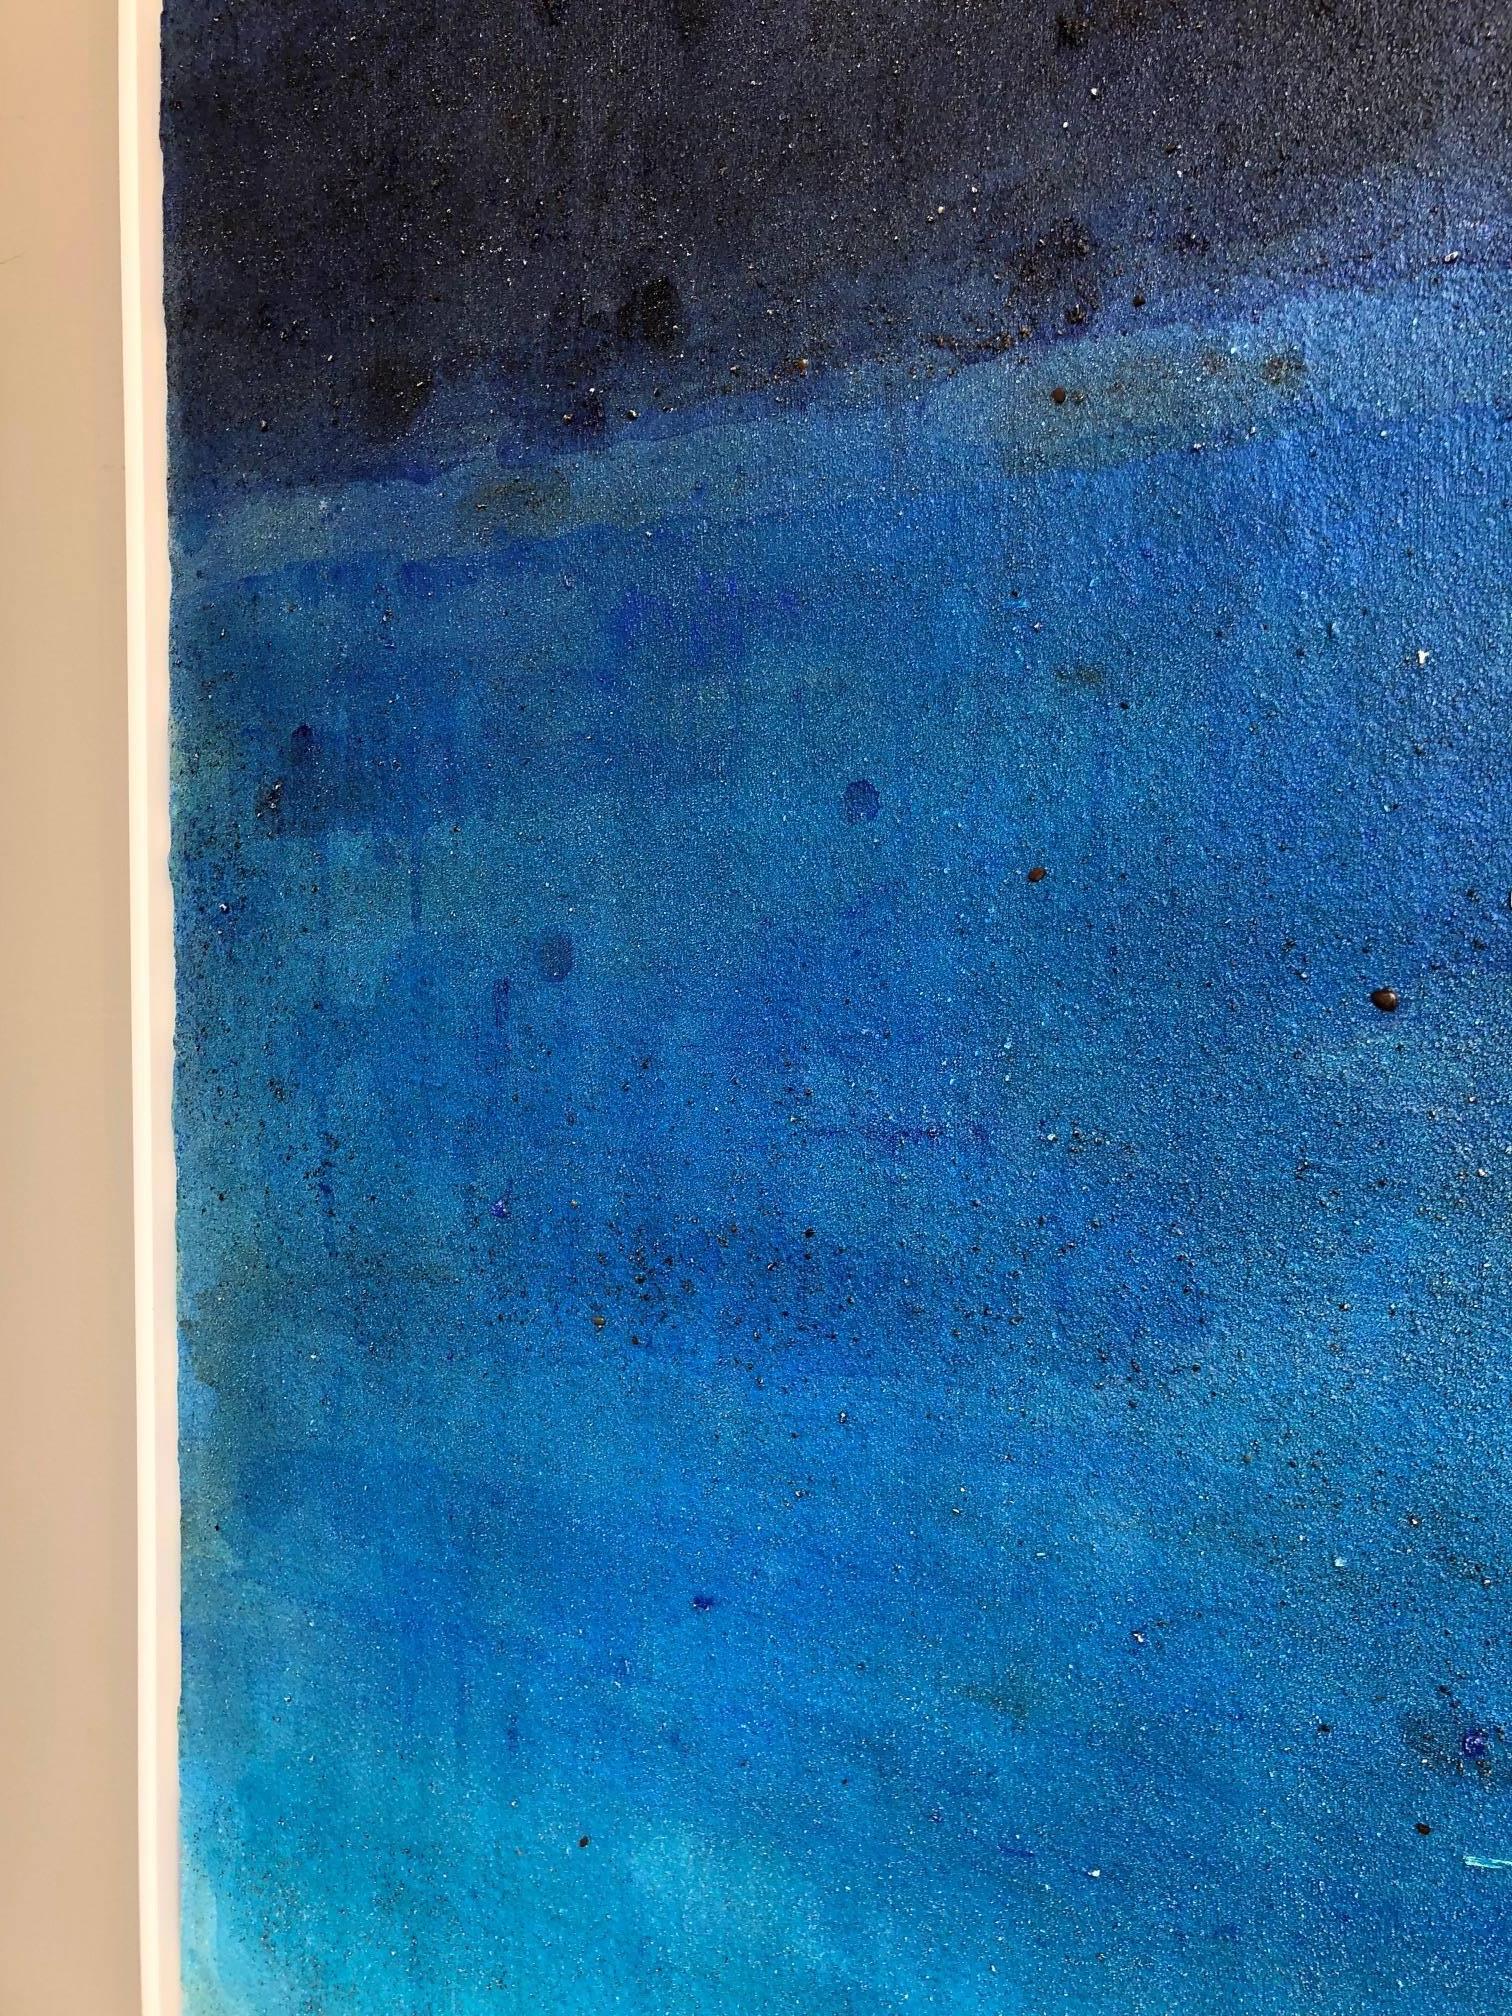 Nourish Her Blue / acrylic on canvas 7